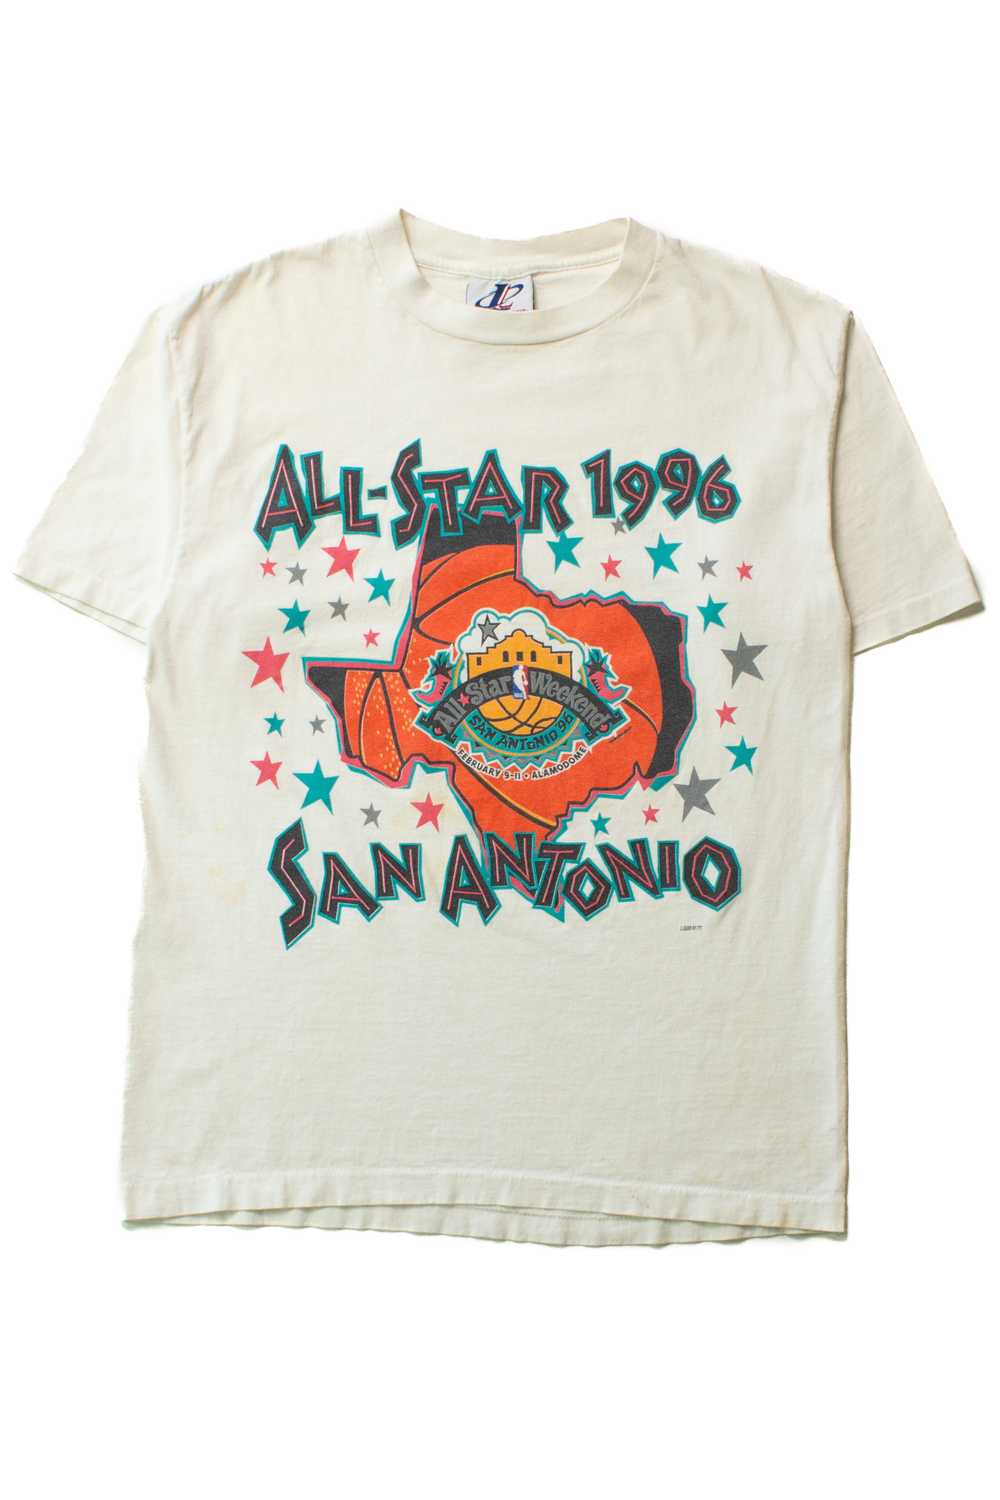 Vintage San Antonio All Star Weekend T-Shirt (199… - image 1